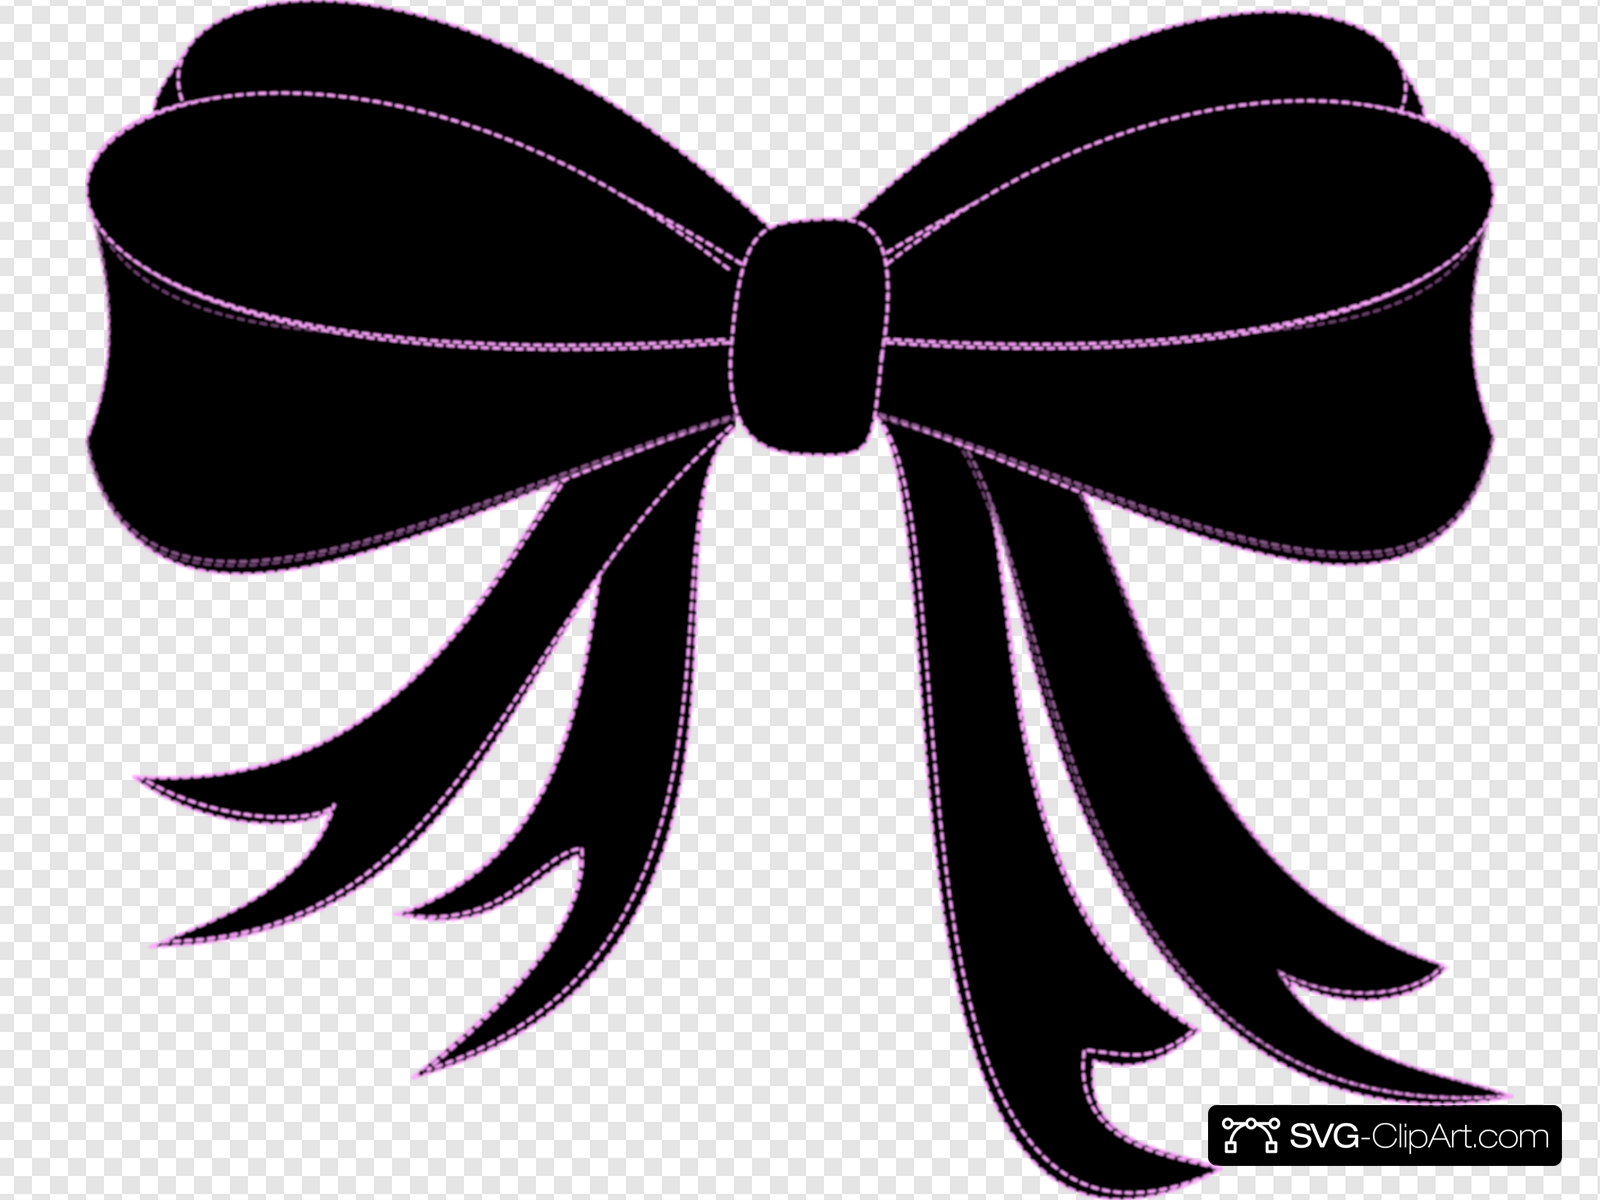 Black Bow Ribbon Clip art, Icon and SVG.